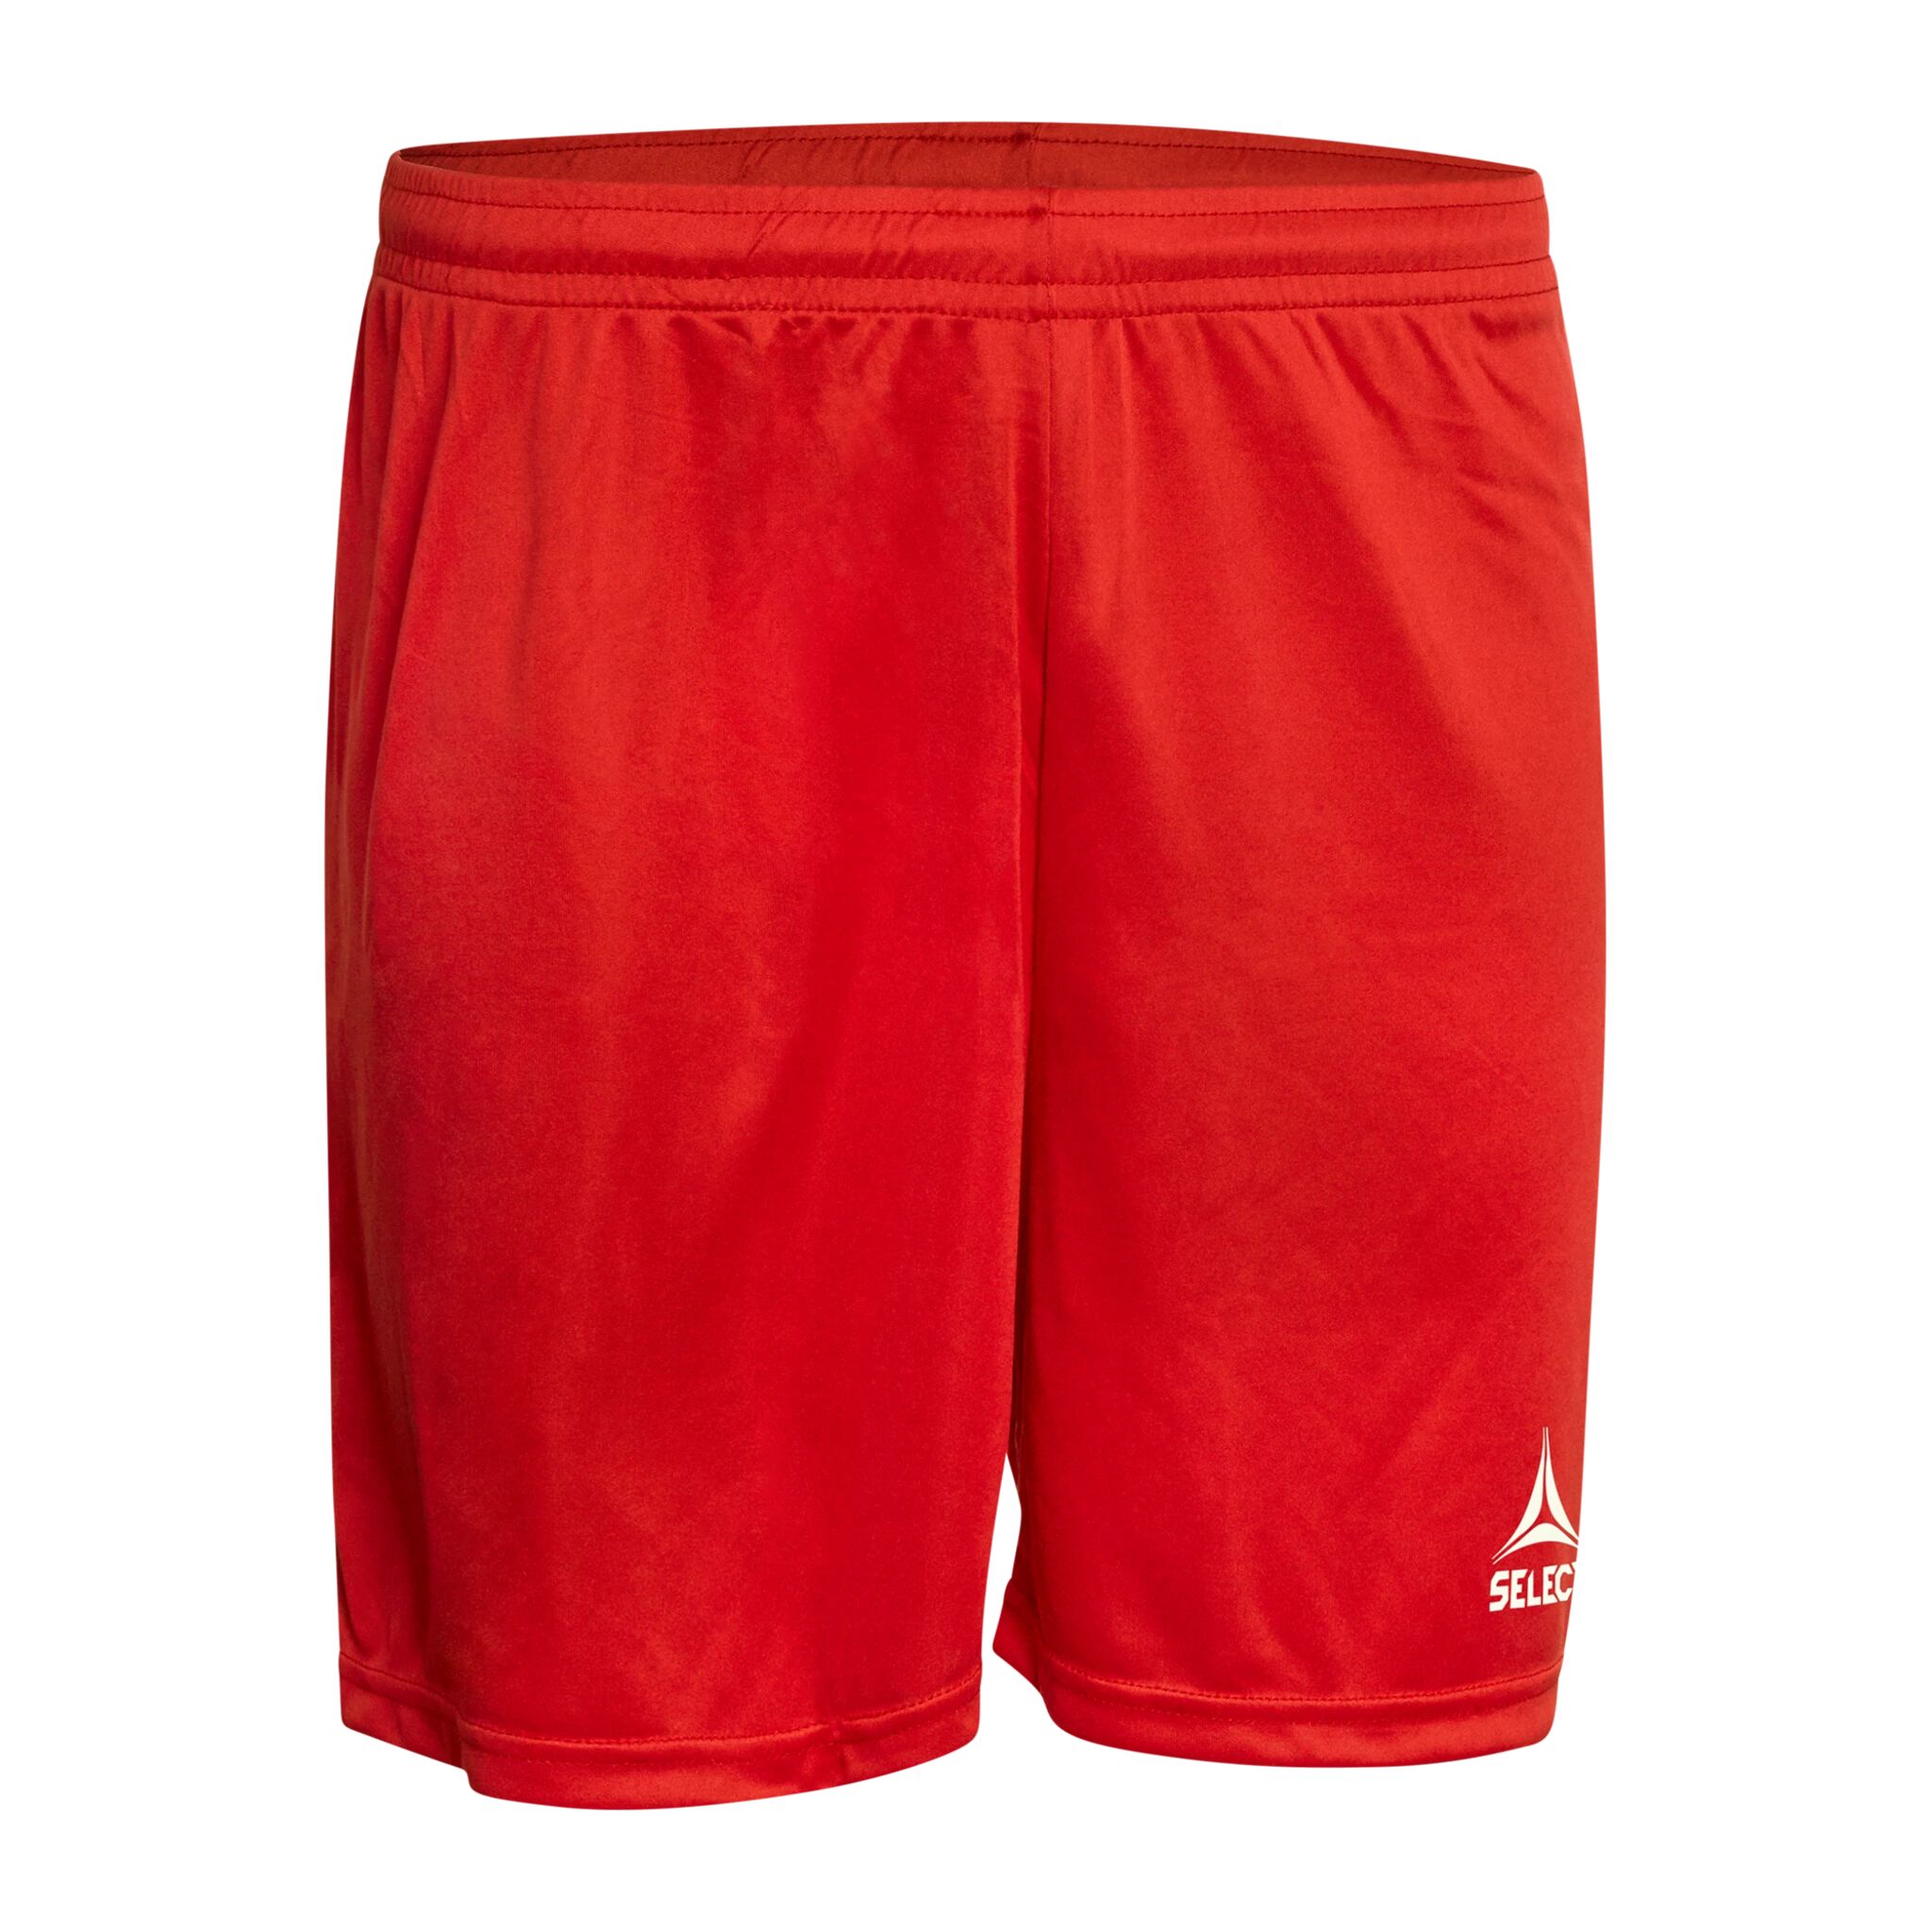 Select Player shorts Pisa, shorts senior L RED